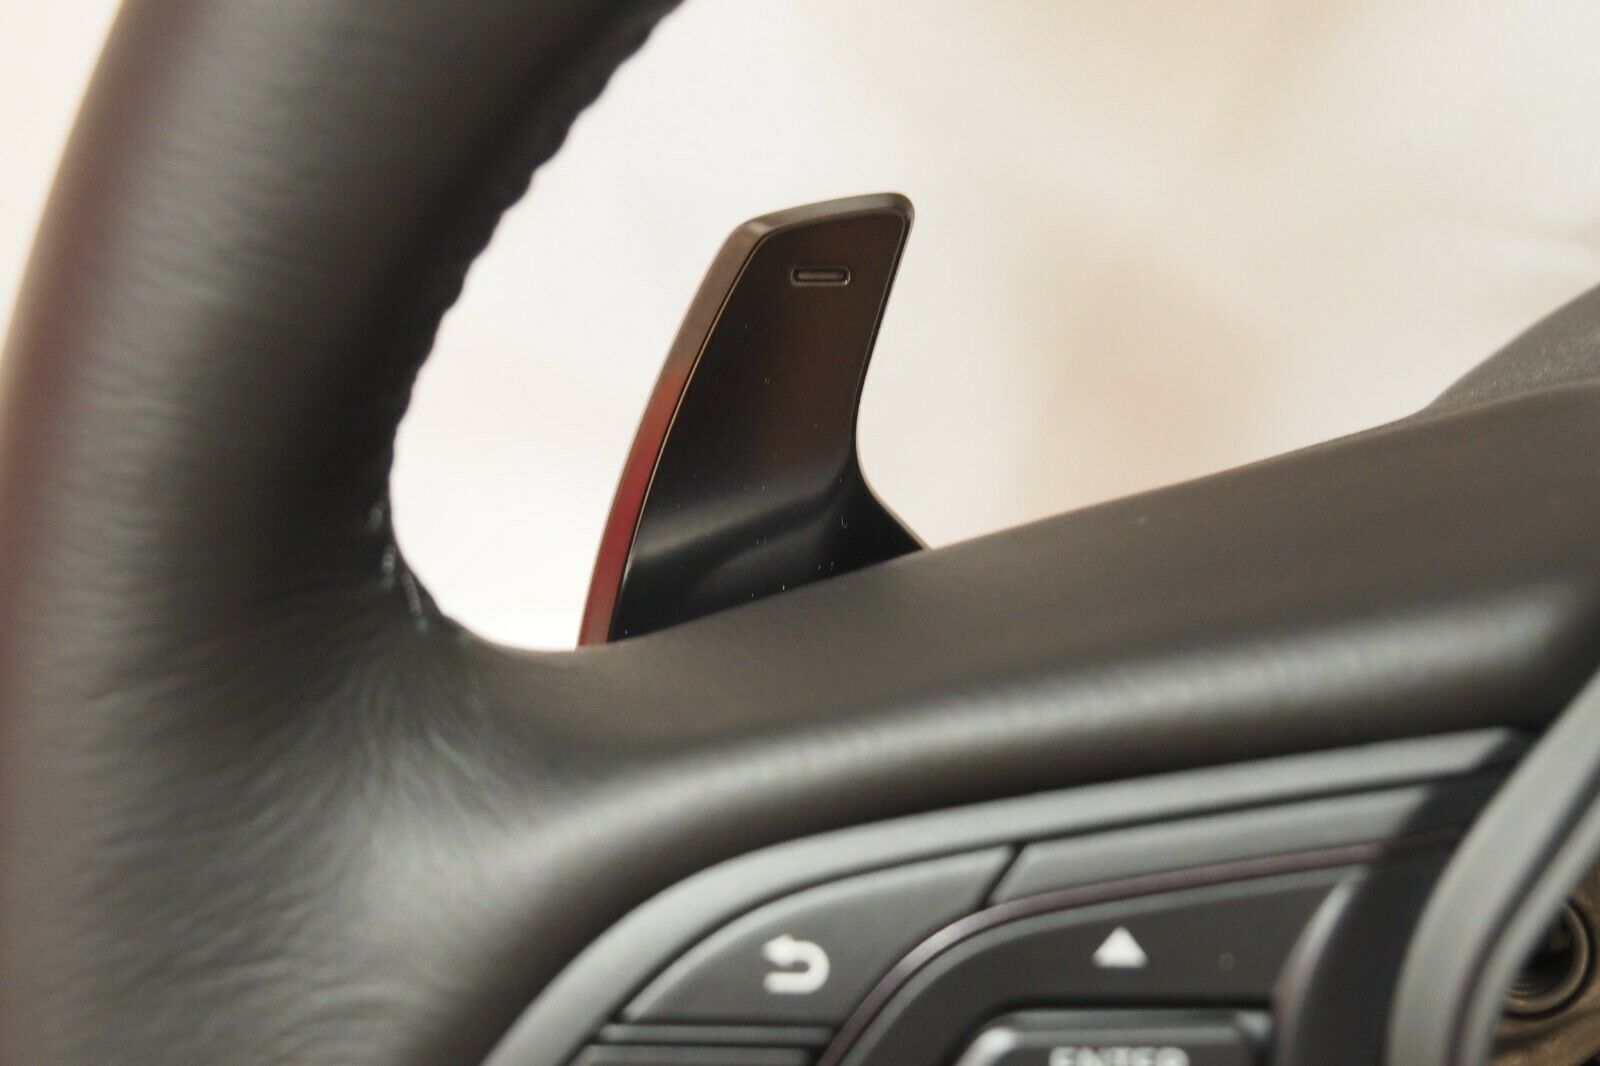 Nissan Genuine 2017- R35 GT-R Steering Wheel horn pad Set Black leather New ★